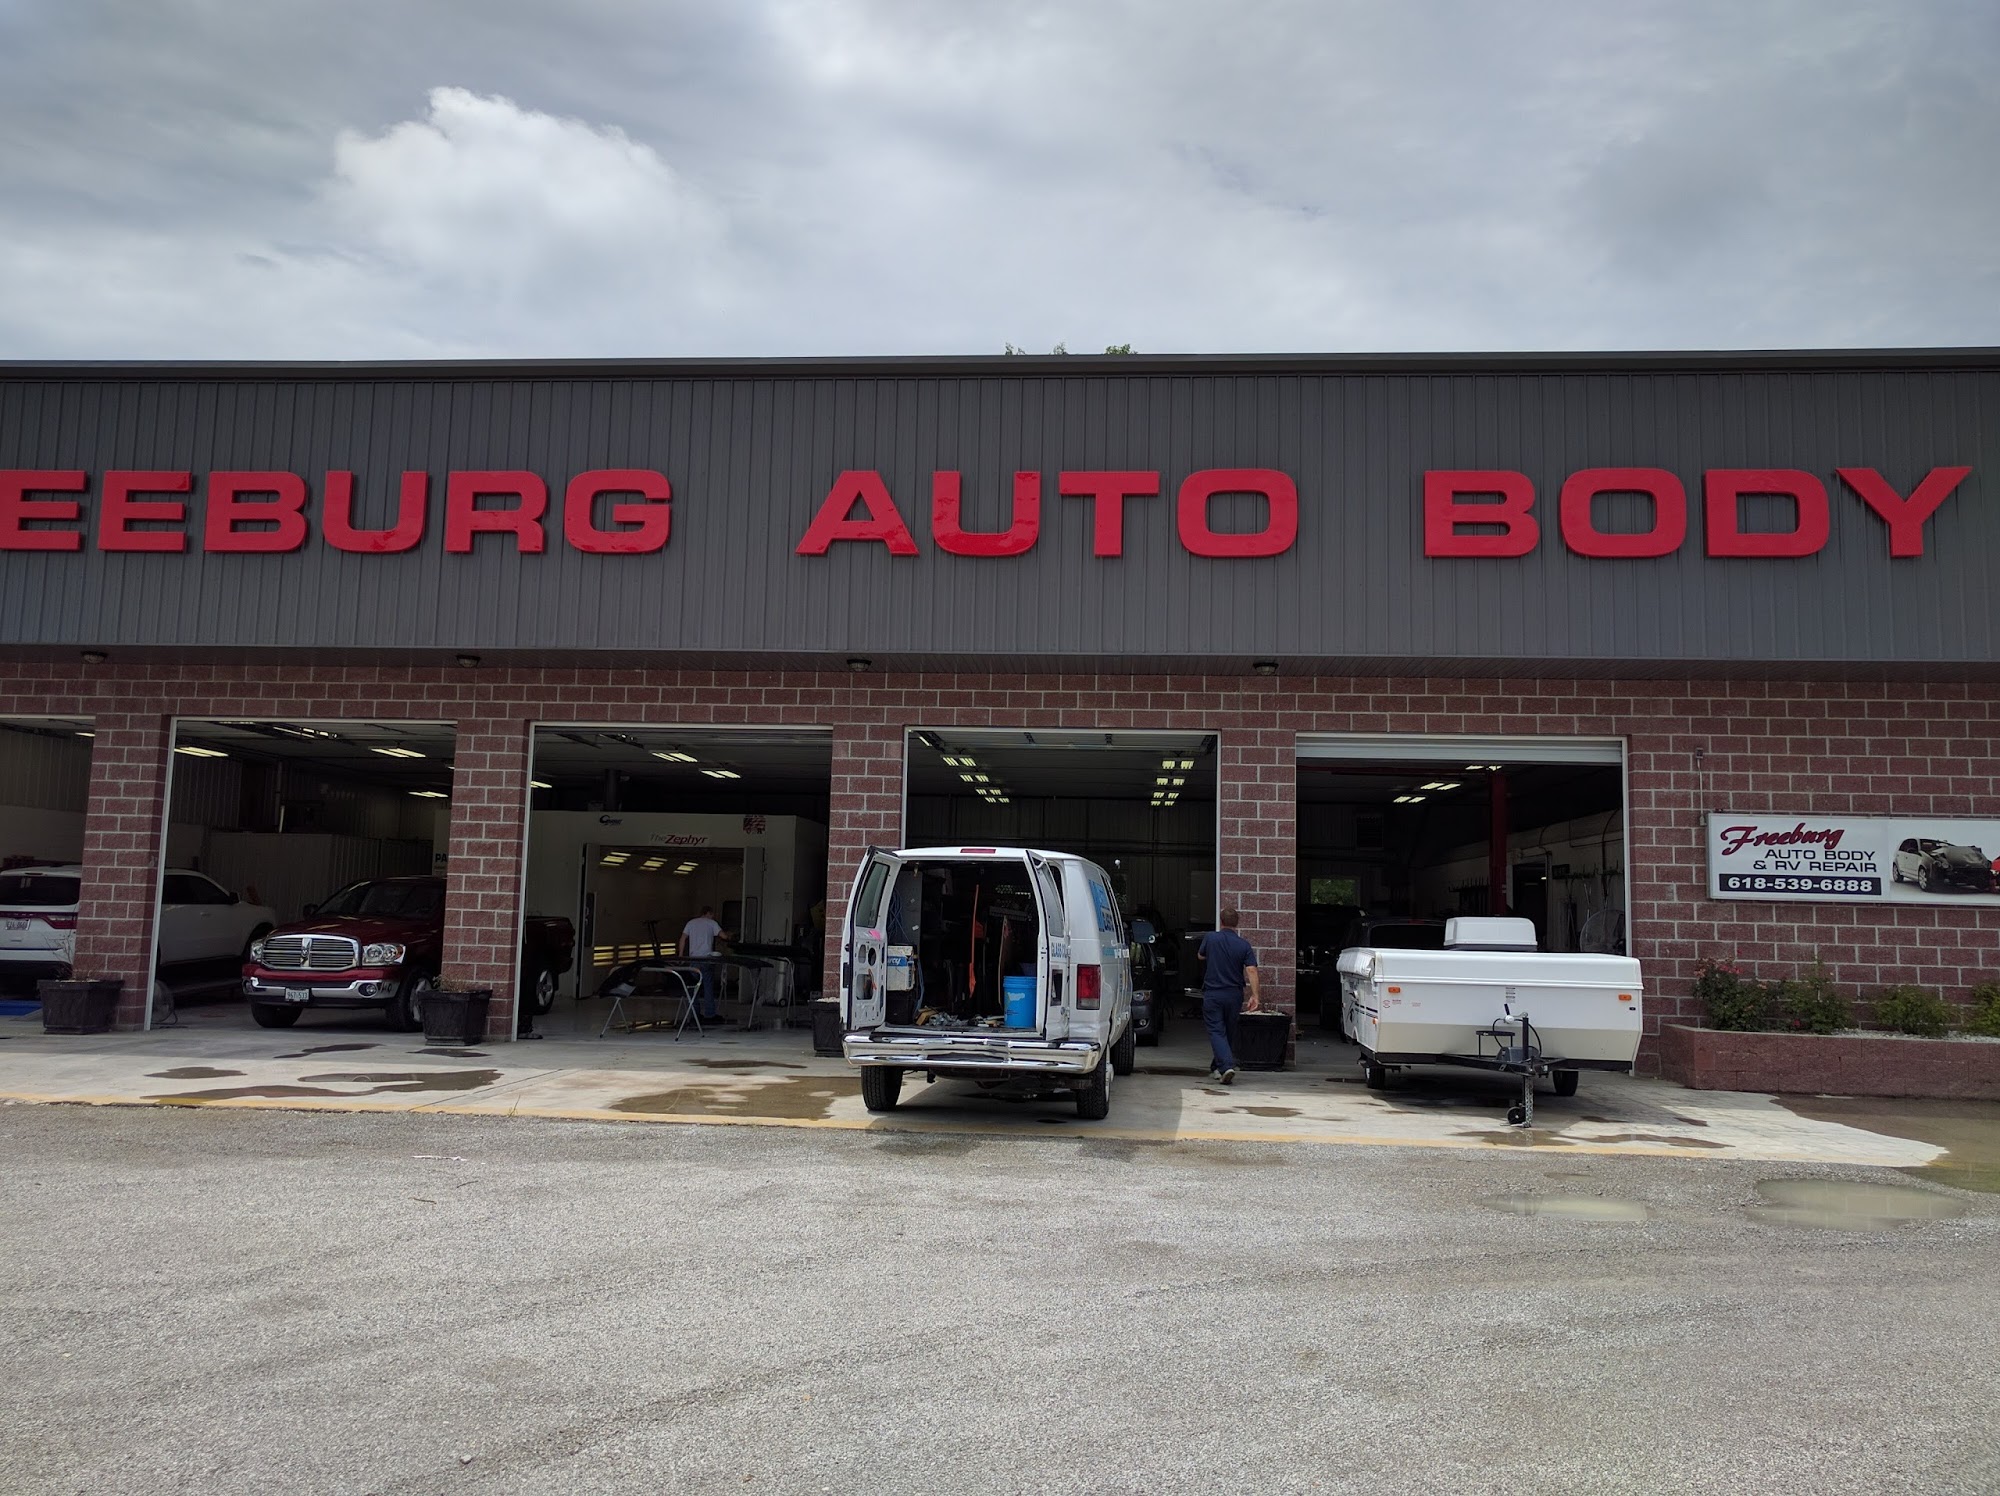 Freeburg Auto Body, Towing, & RV Repair